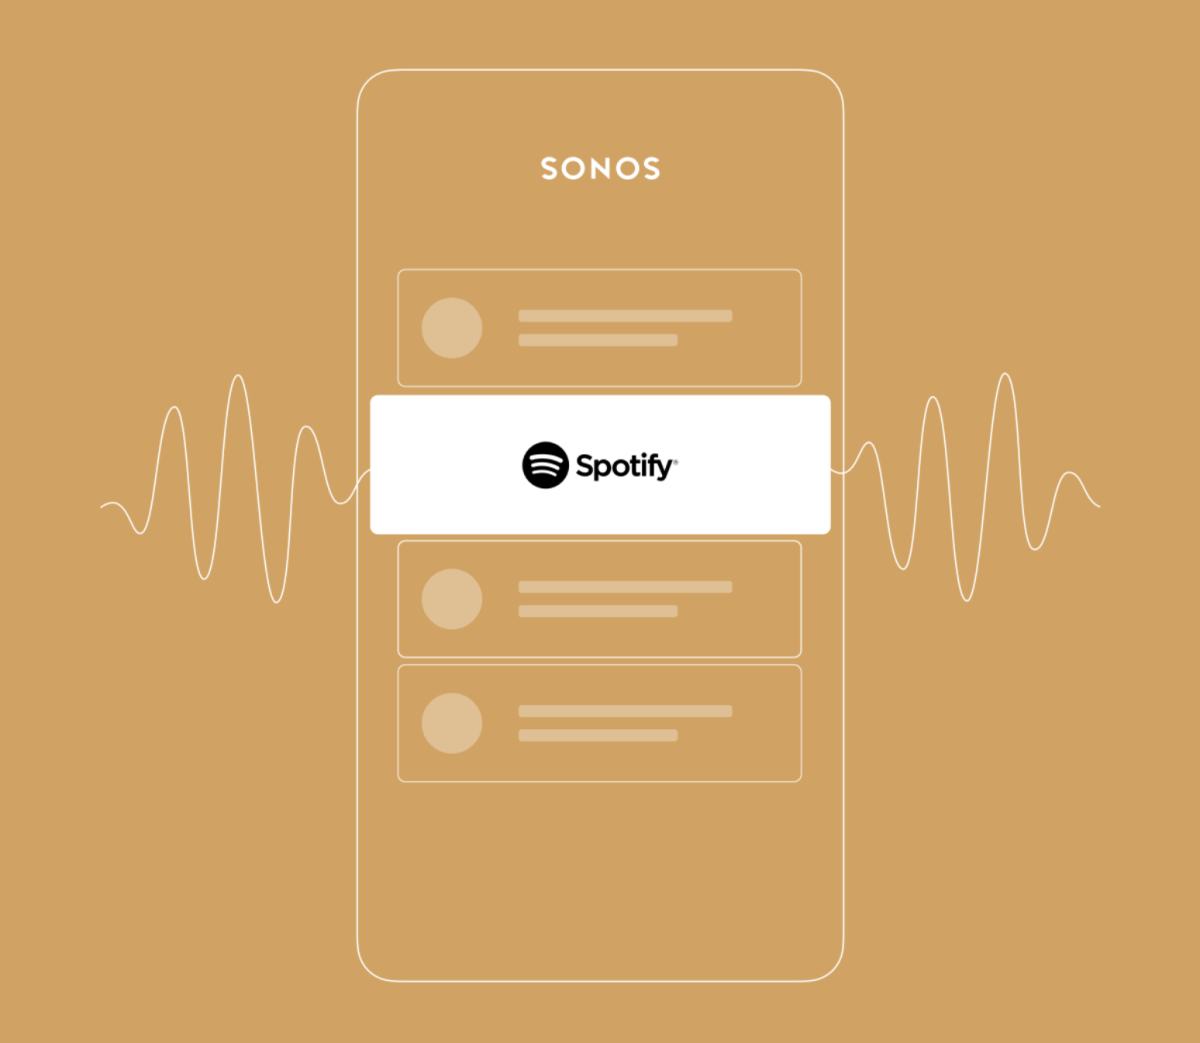 Use Spotify Free On Sonos